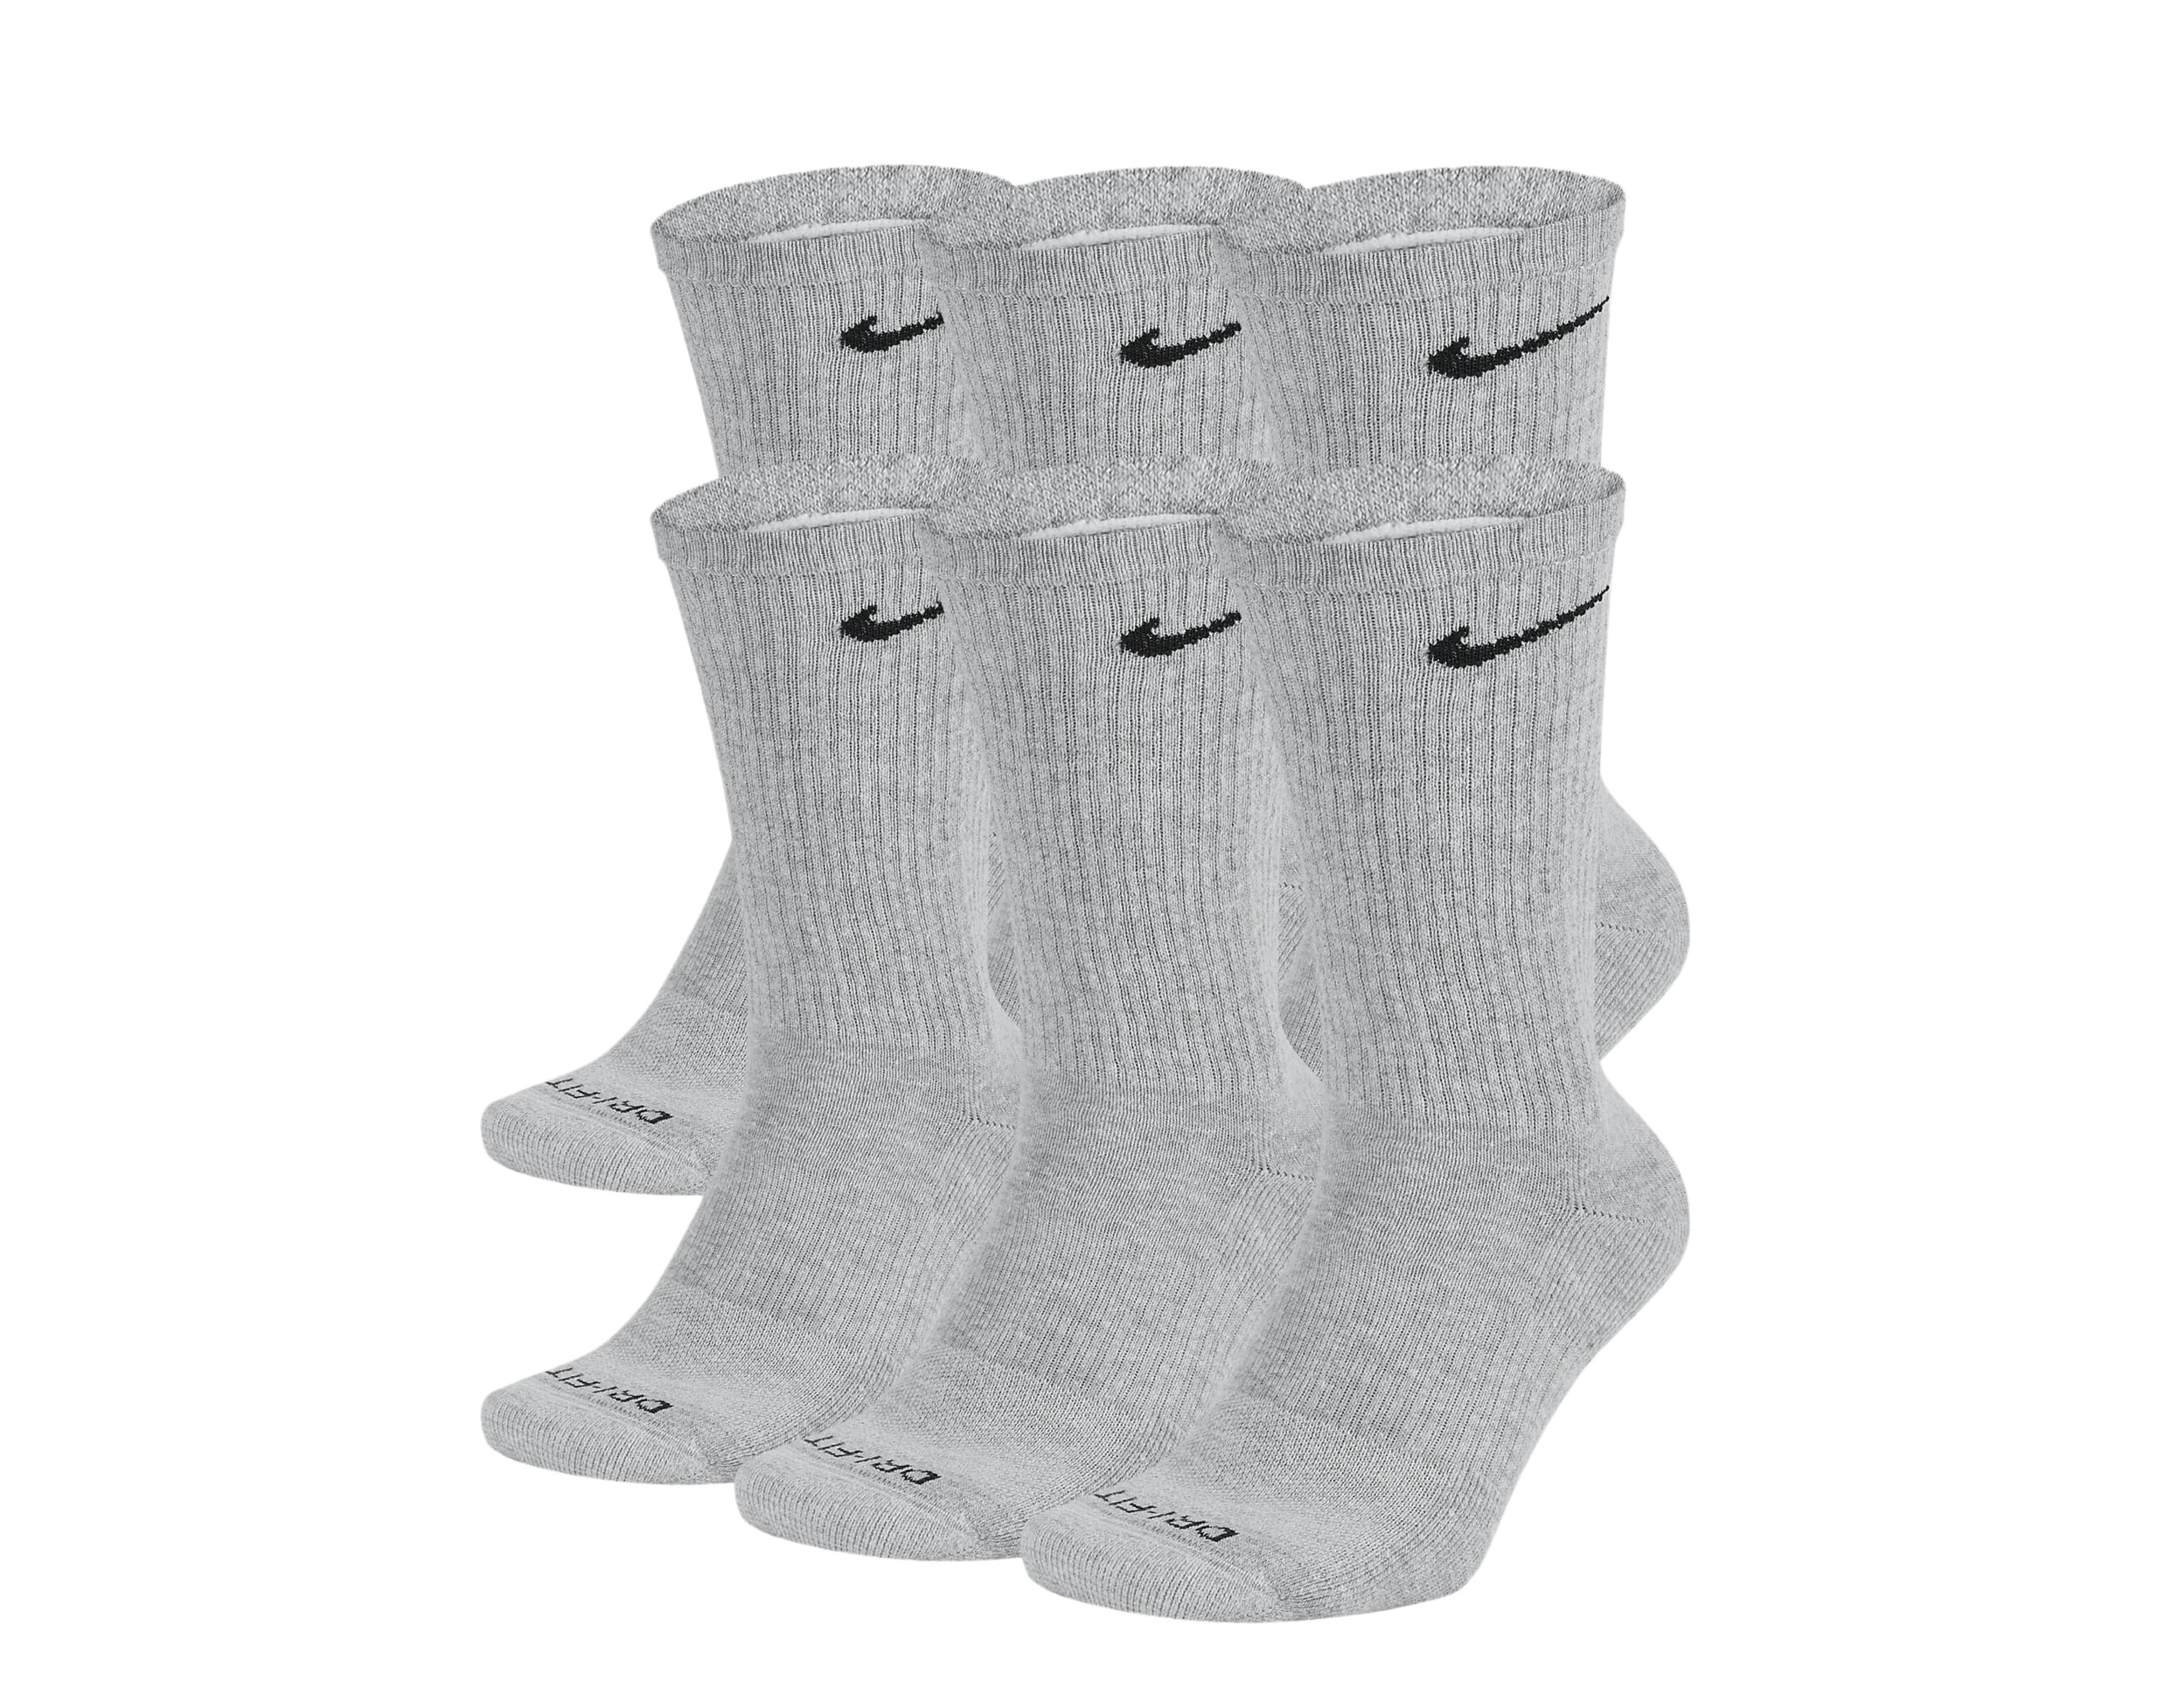 Nike Everyday Plus Cushion Crew Grey/Black Socks - 6 Pair Pack SX6897-063  Men's Large 8-12 